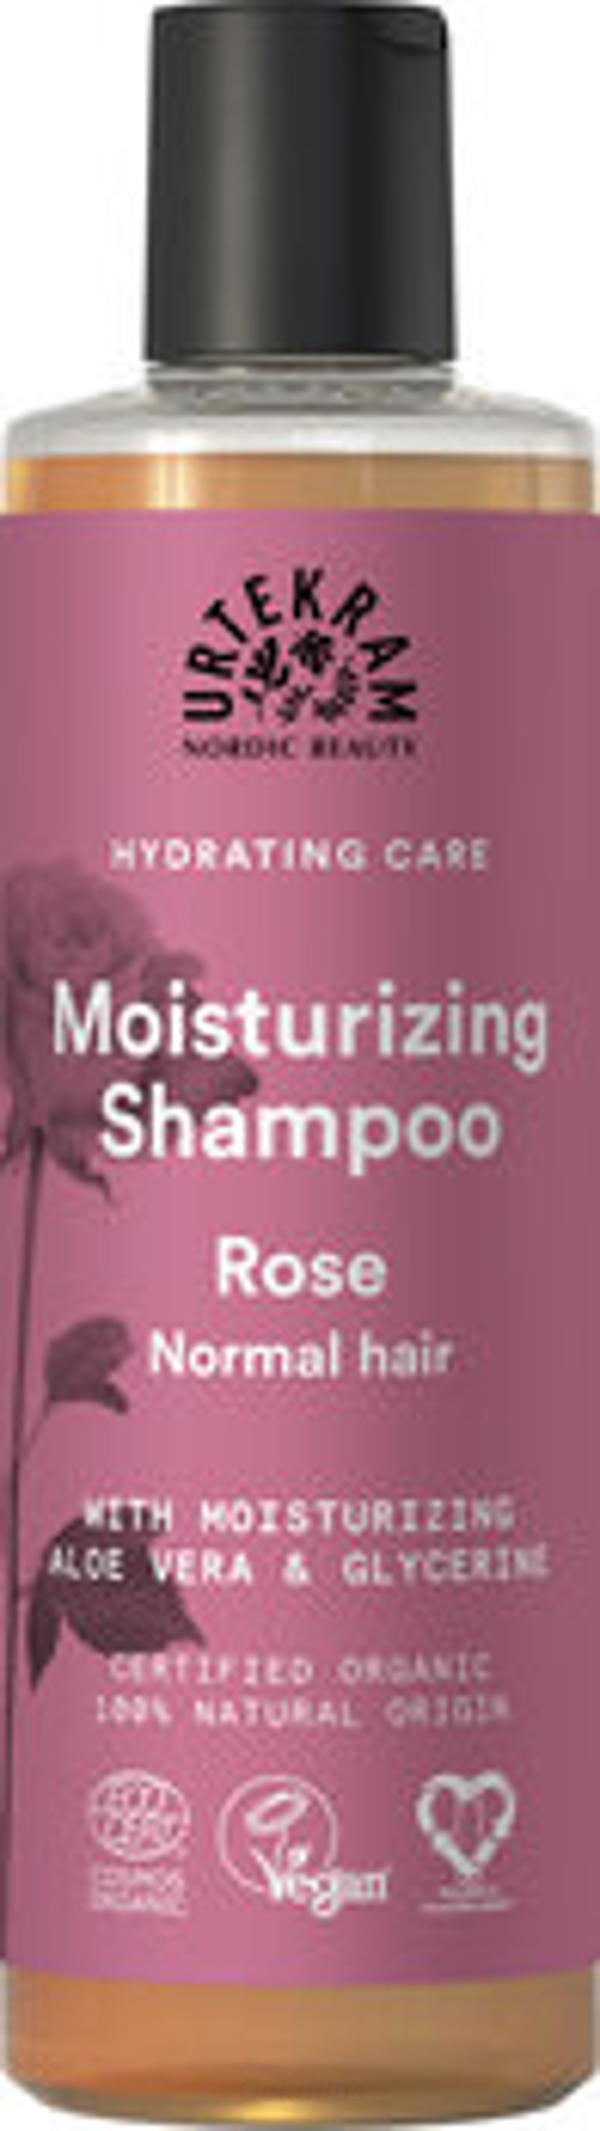 Produktfoto zu Rose Shampoo 250ml